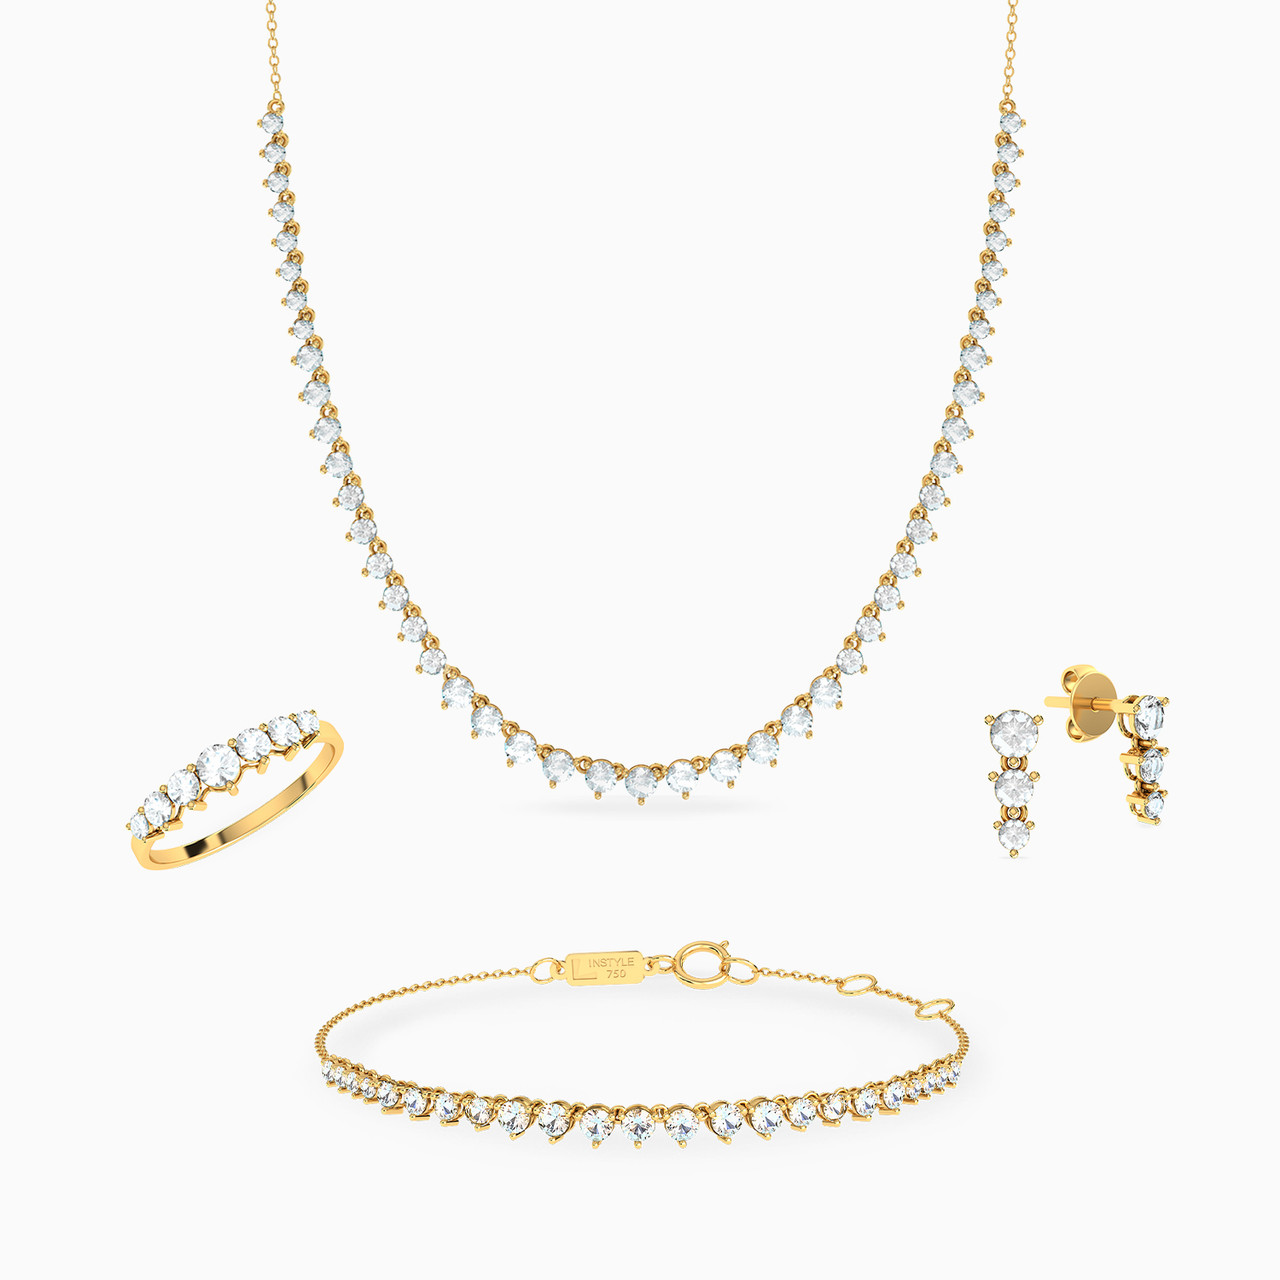 18K Gold Cubic Zirconia Jewelry Set -3 Pieces